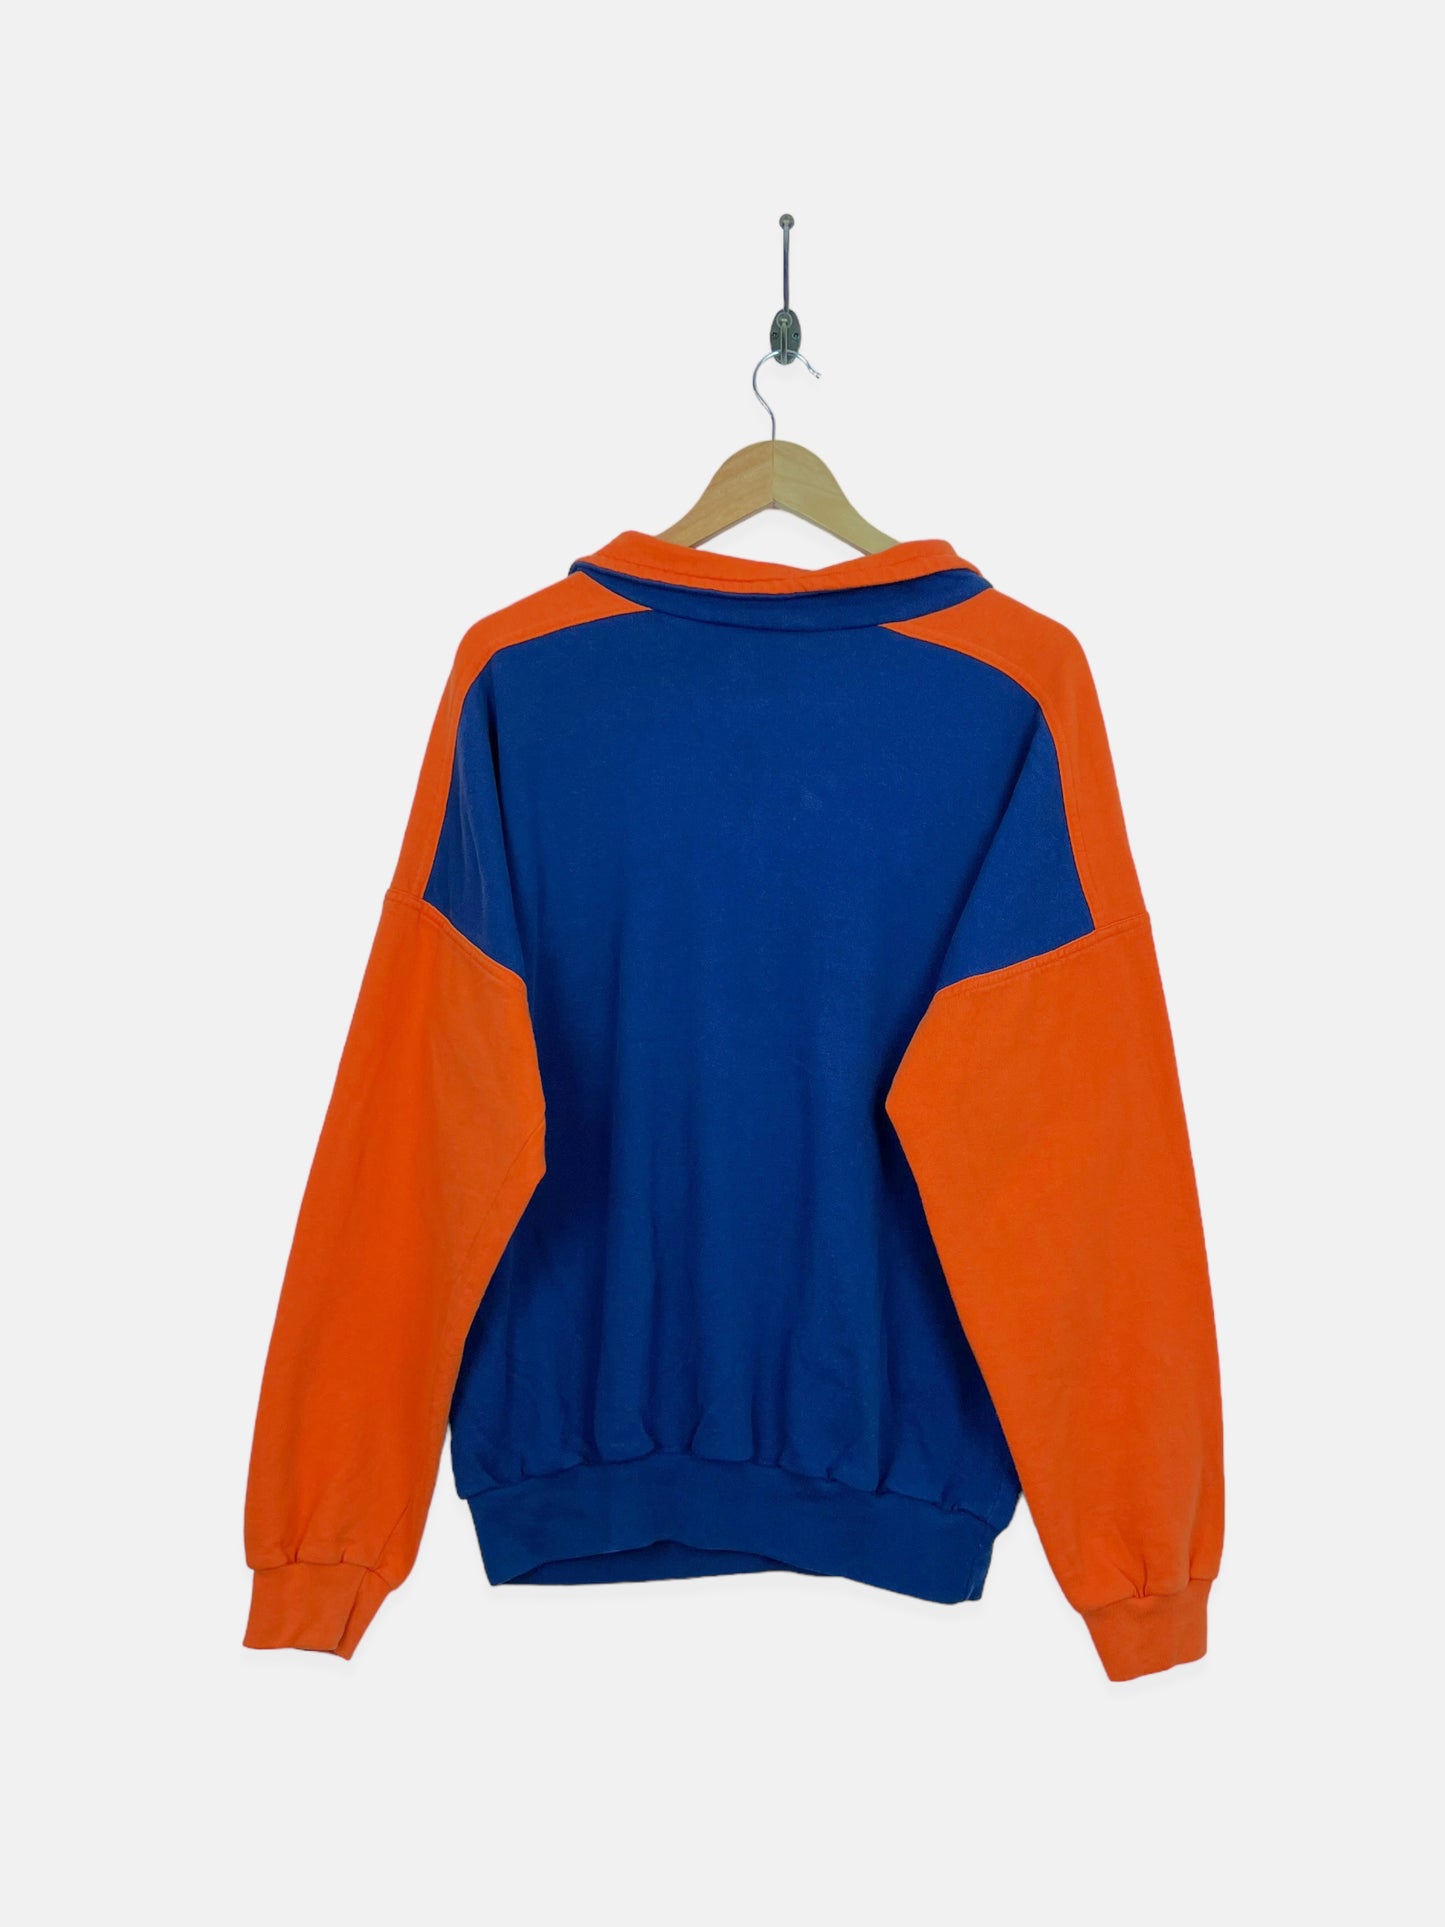 1994 Chicago Bears NFL USA Made Vintage Quarterzip Sweatshirt Size M-L